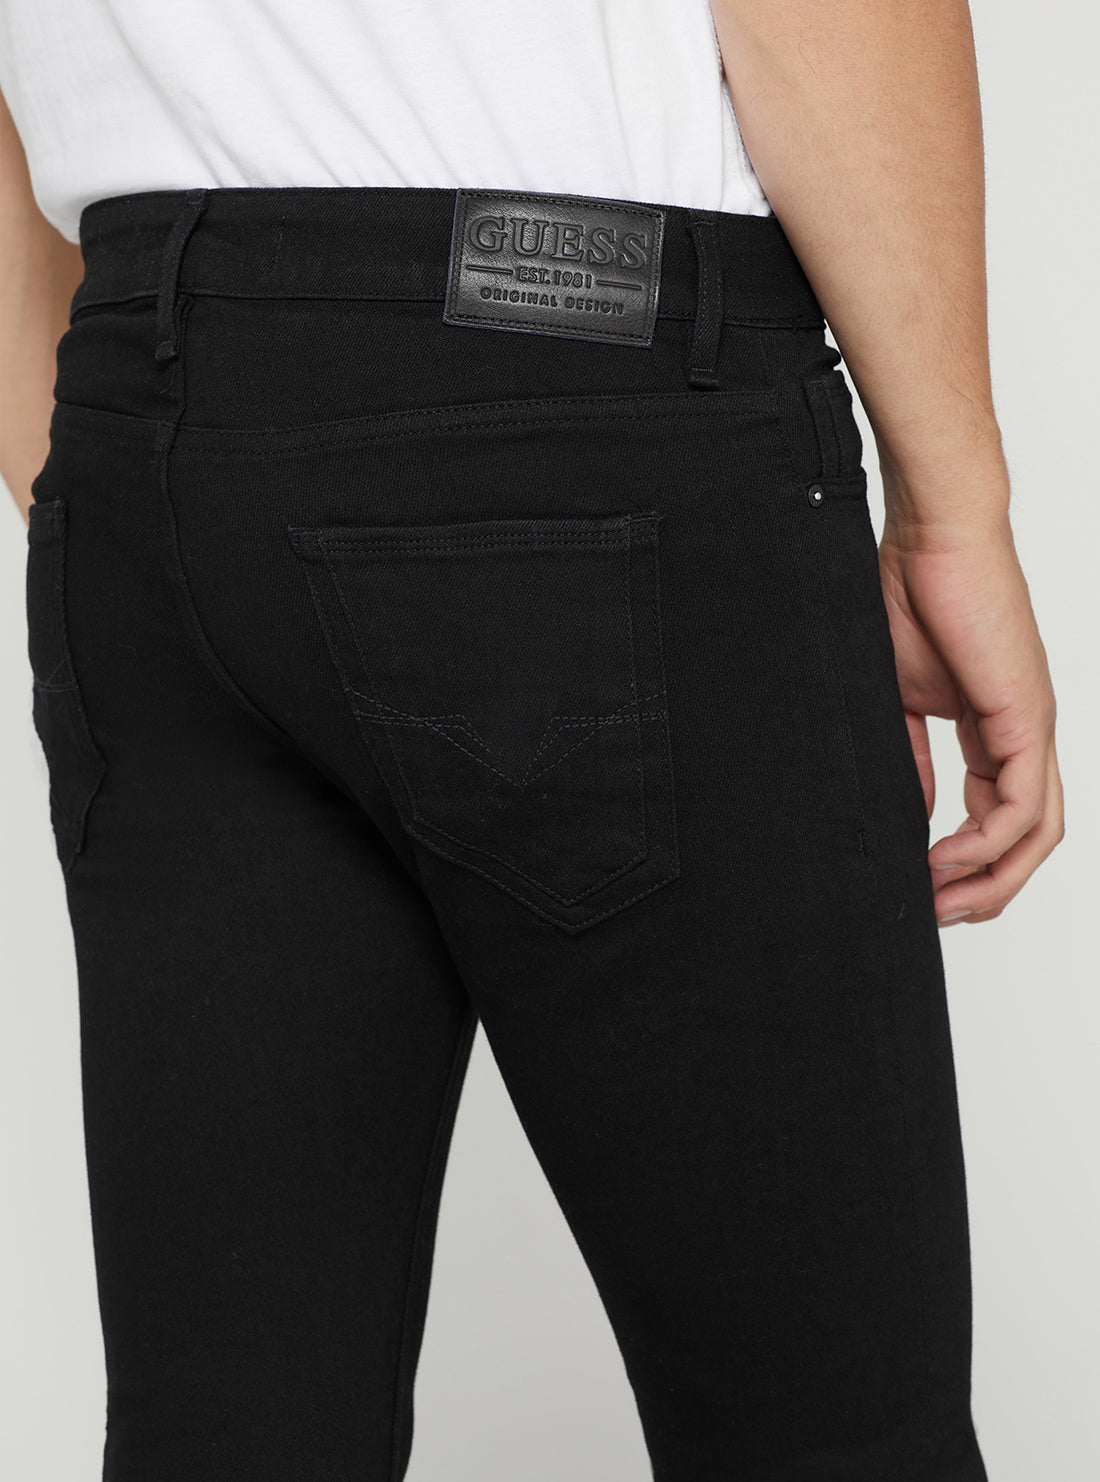 GUESS Men's Eco Low-Rise Skinny Miami Denim Jeans in Carry Black Wash M2YAN1D4Q51 Detail View